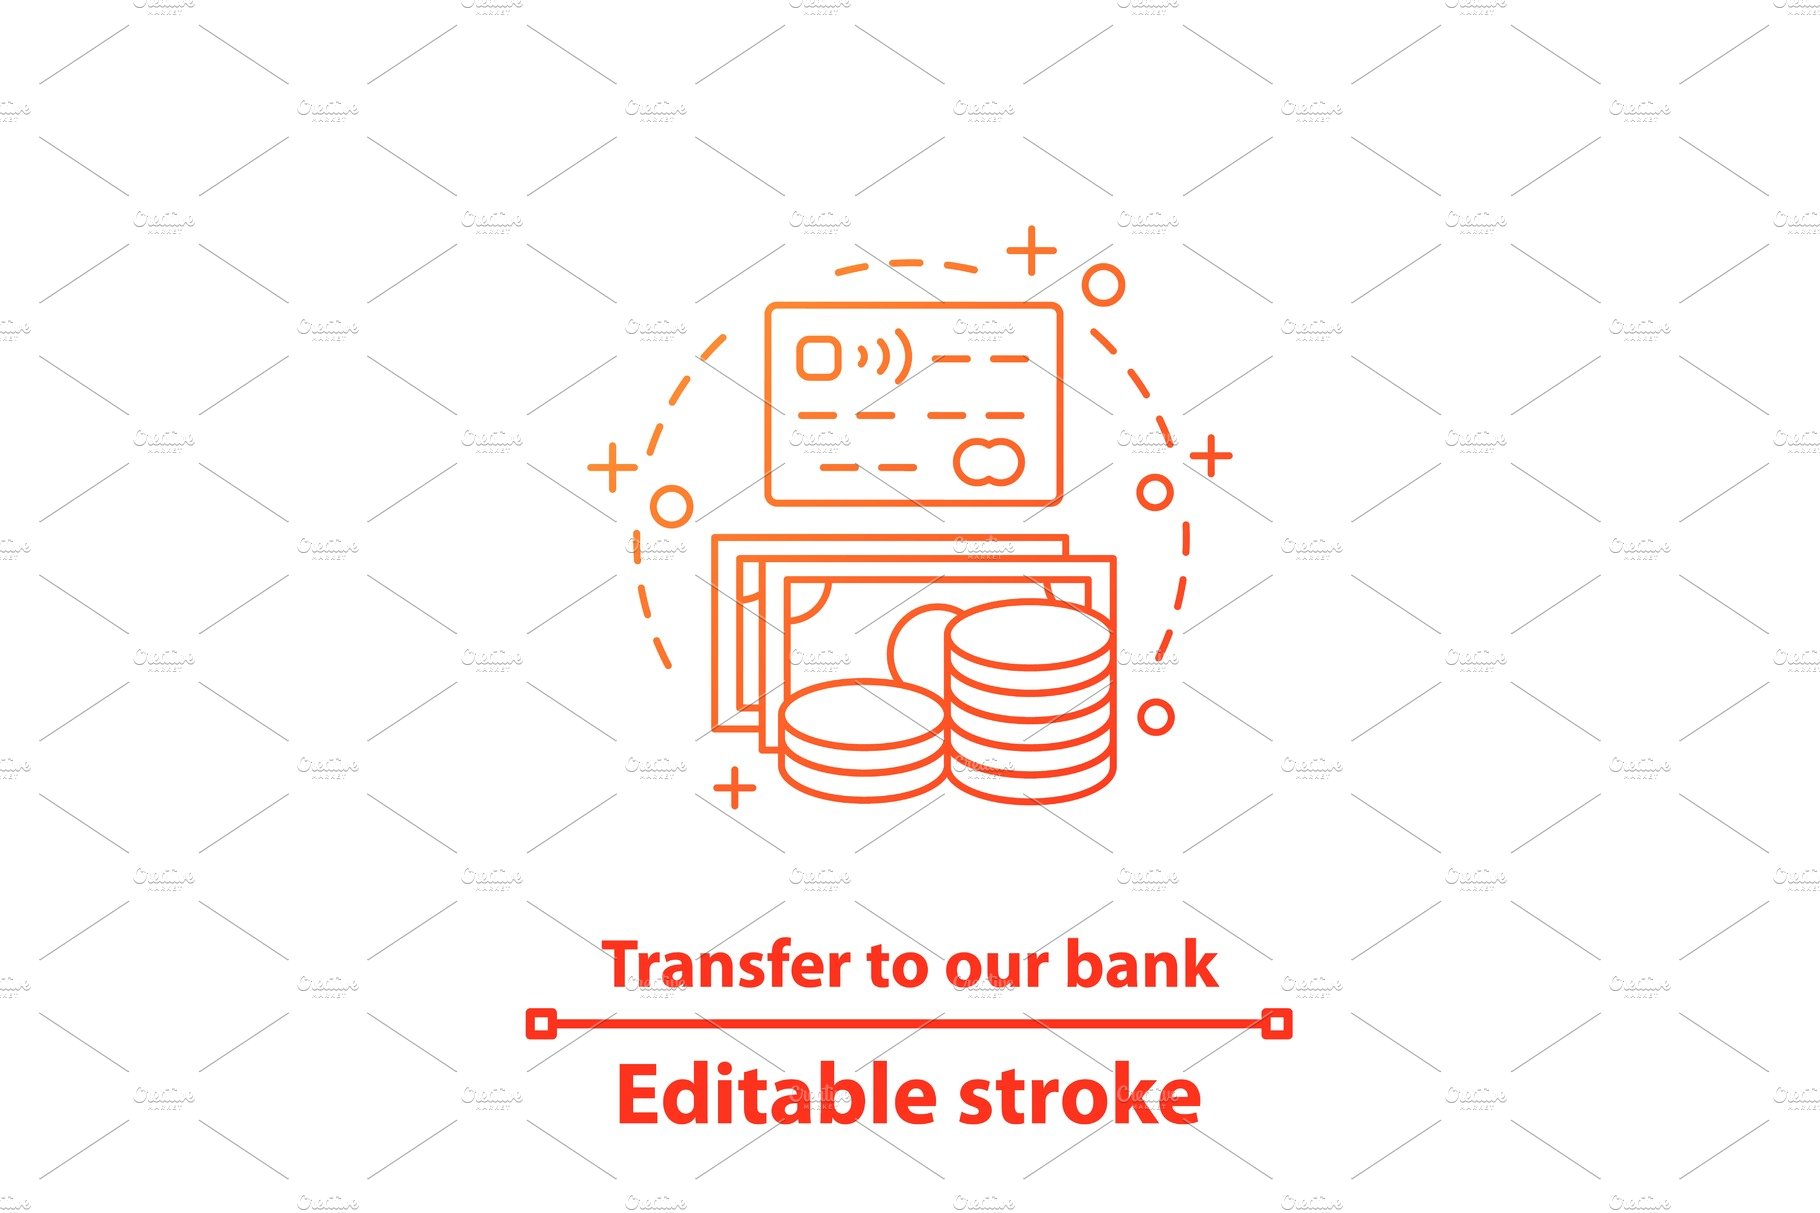 Money transfer concept icon cover image.